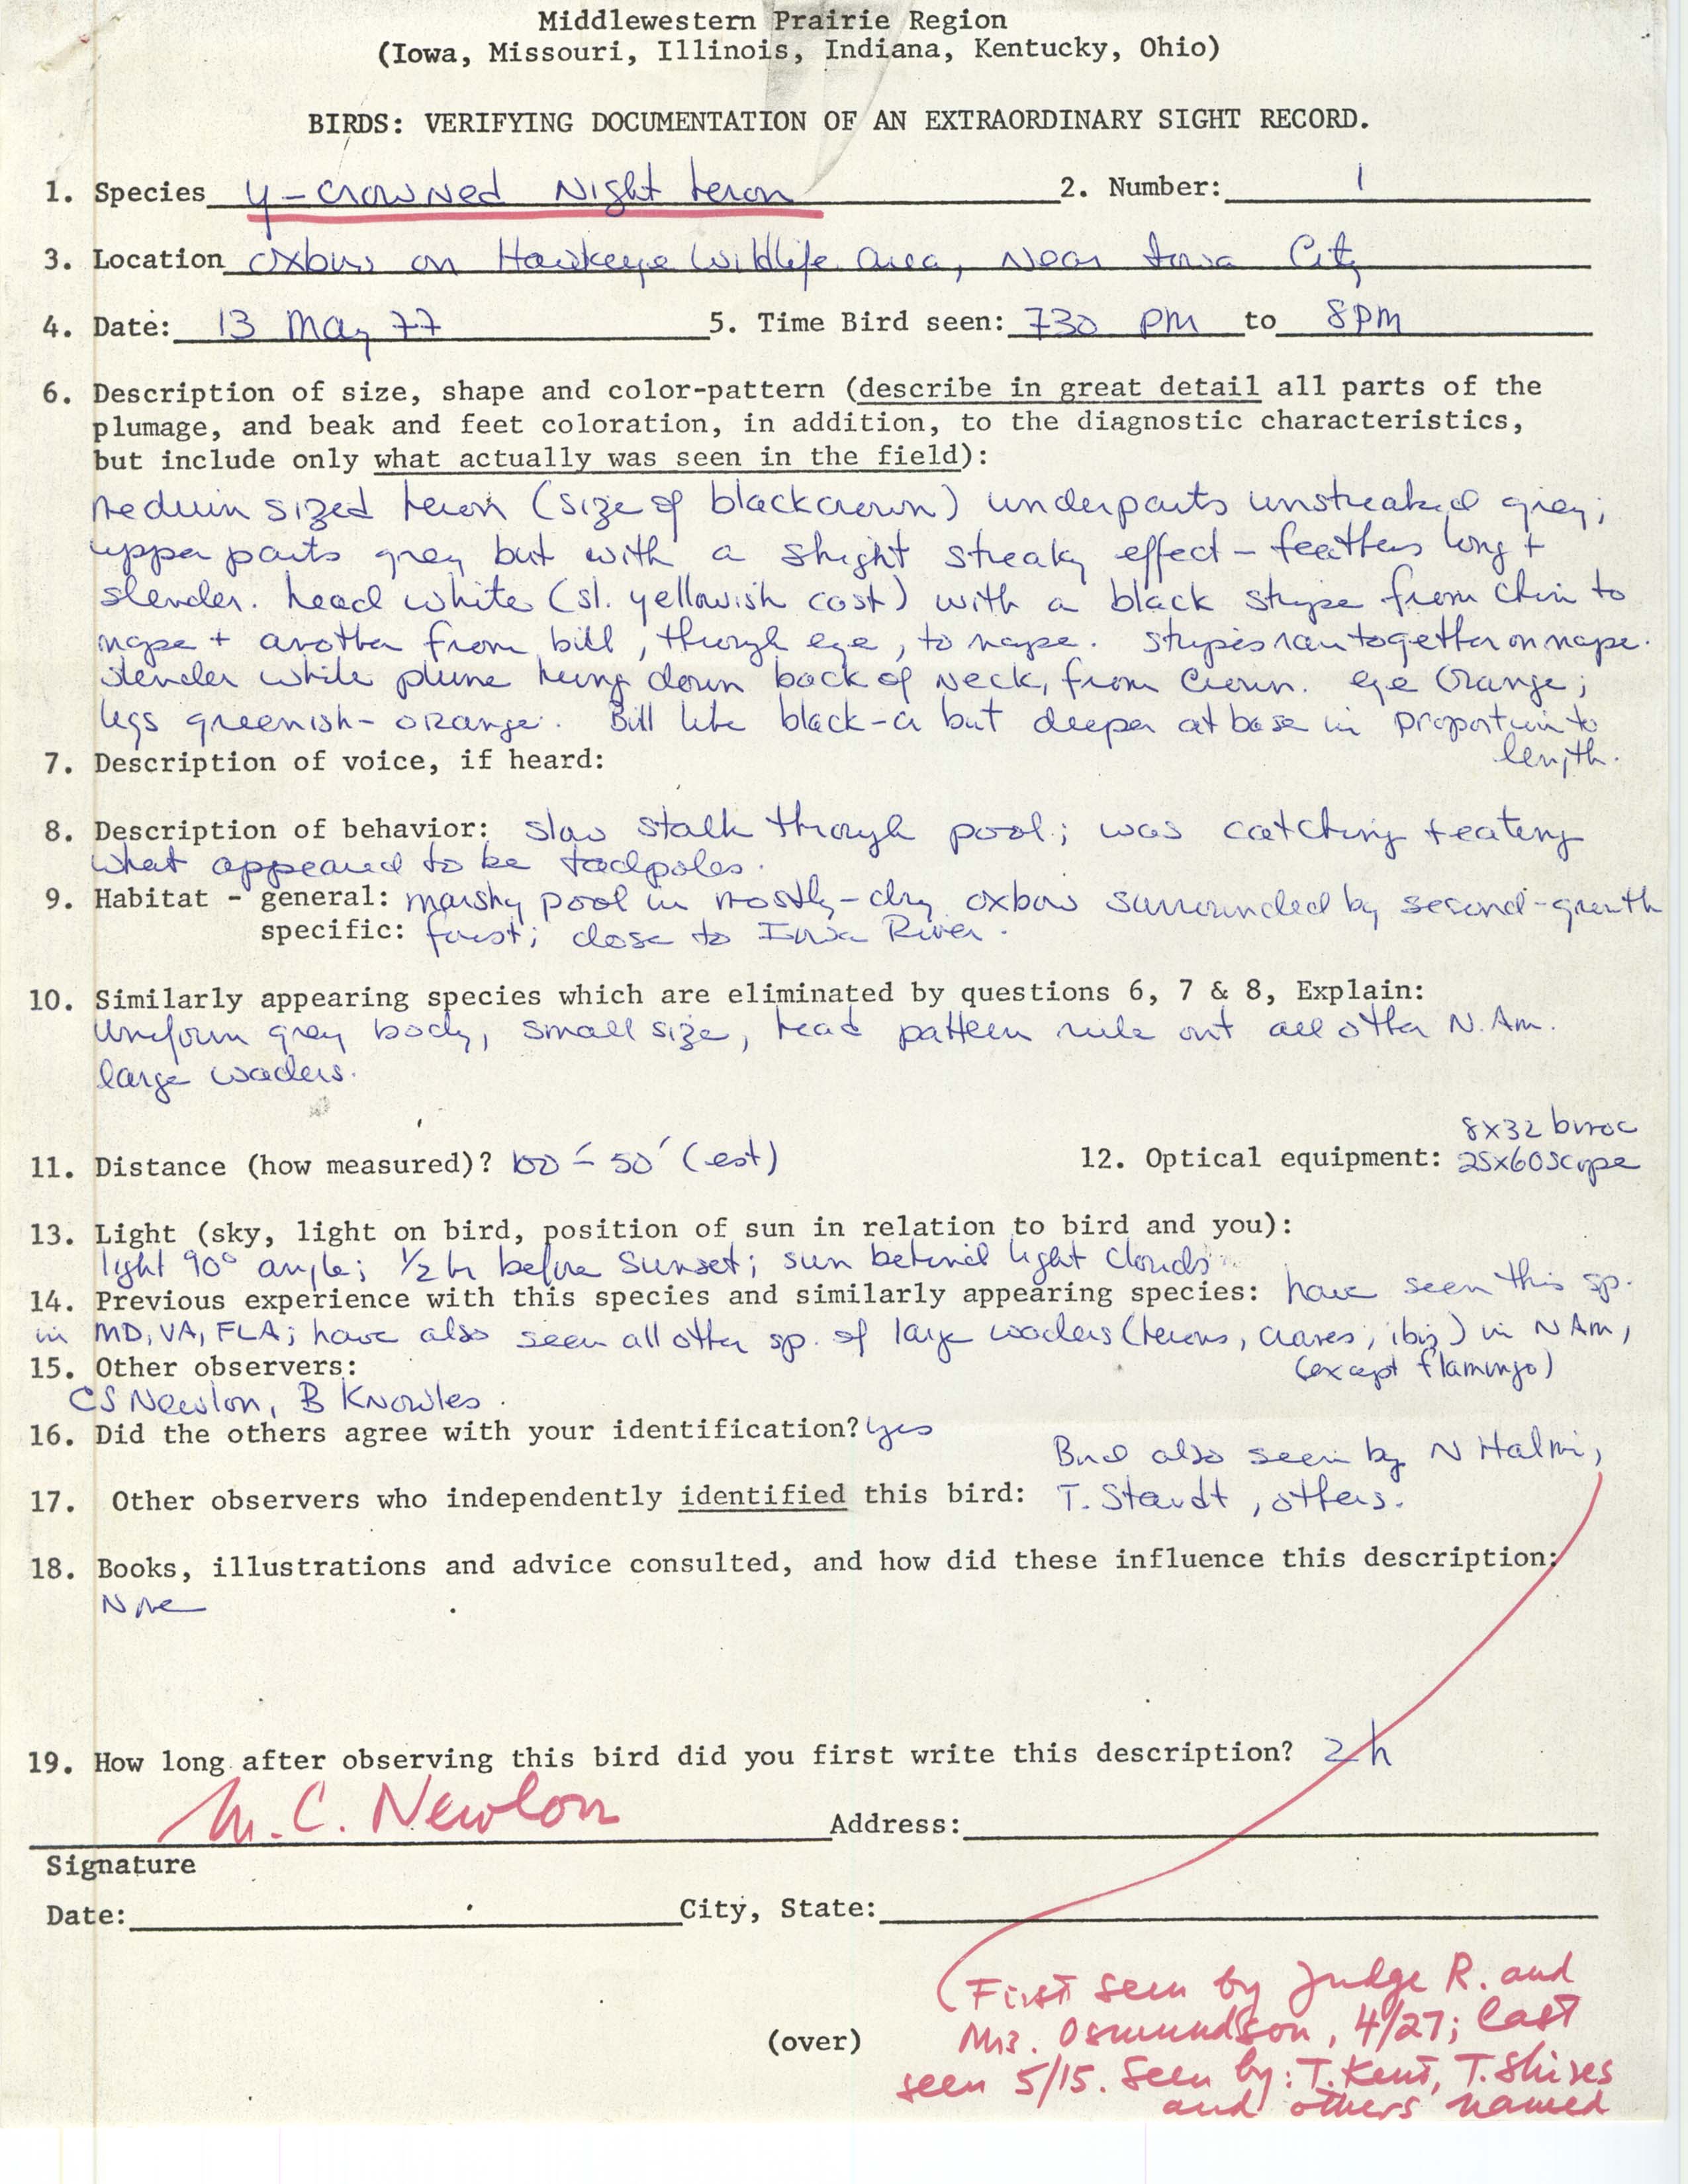 Rare bird documentation form for Yellow-crowned Night Heron at Hawkeye Wildlife Area, 1977